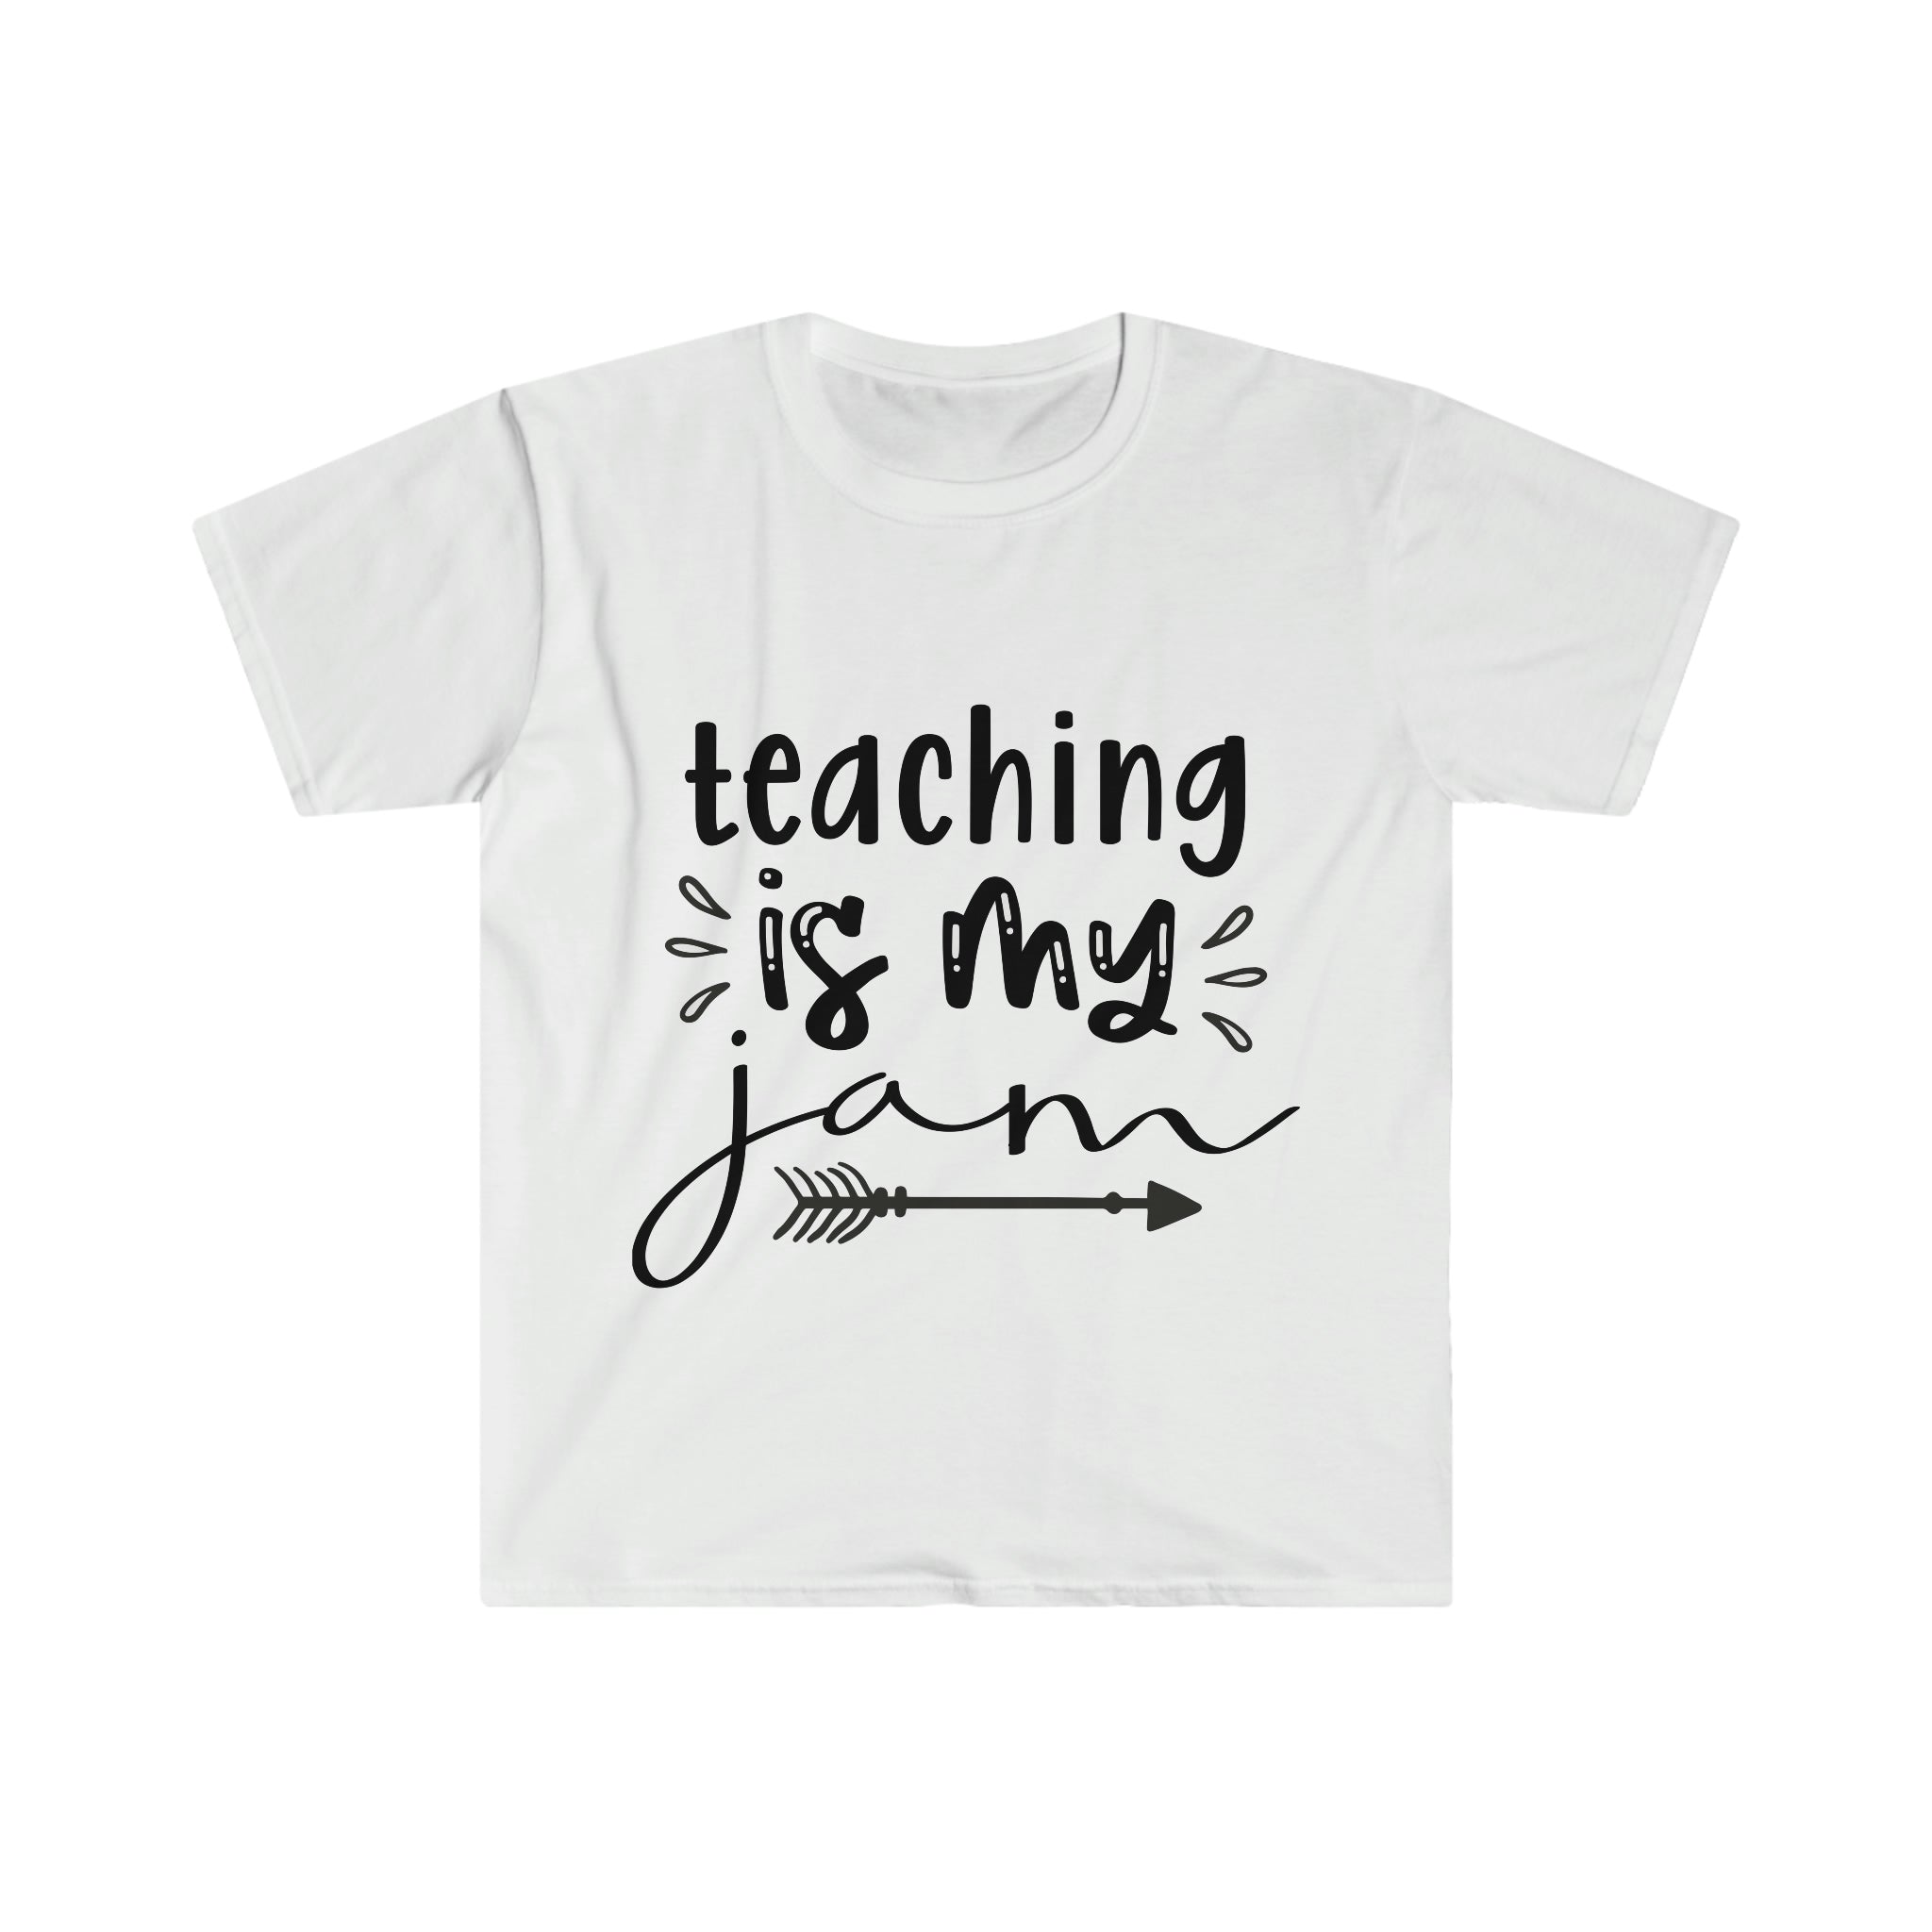 Teaching is My Jam T-Shirt: Perfect for educators!